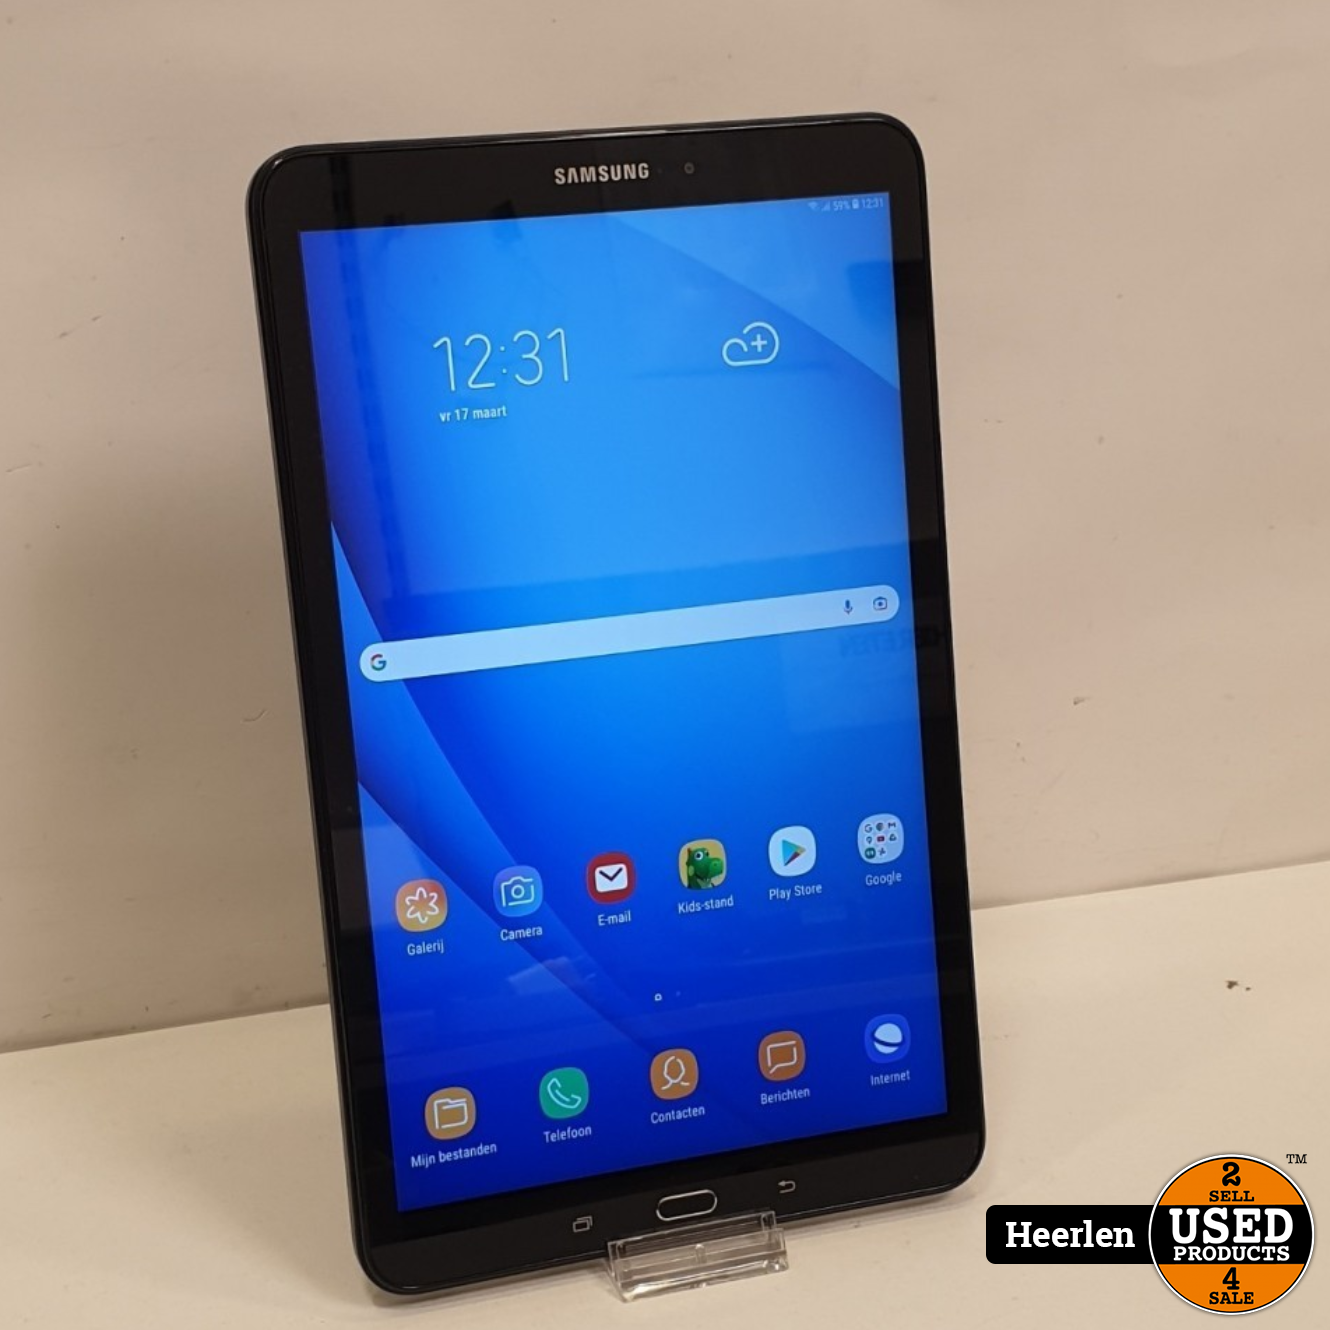 Samsung Galaxy Tab 10.1 (2016) Wifi 4G | Zwart | A-Grade | Met Garantie - Used Products Heerlen